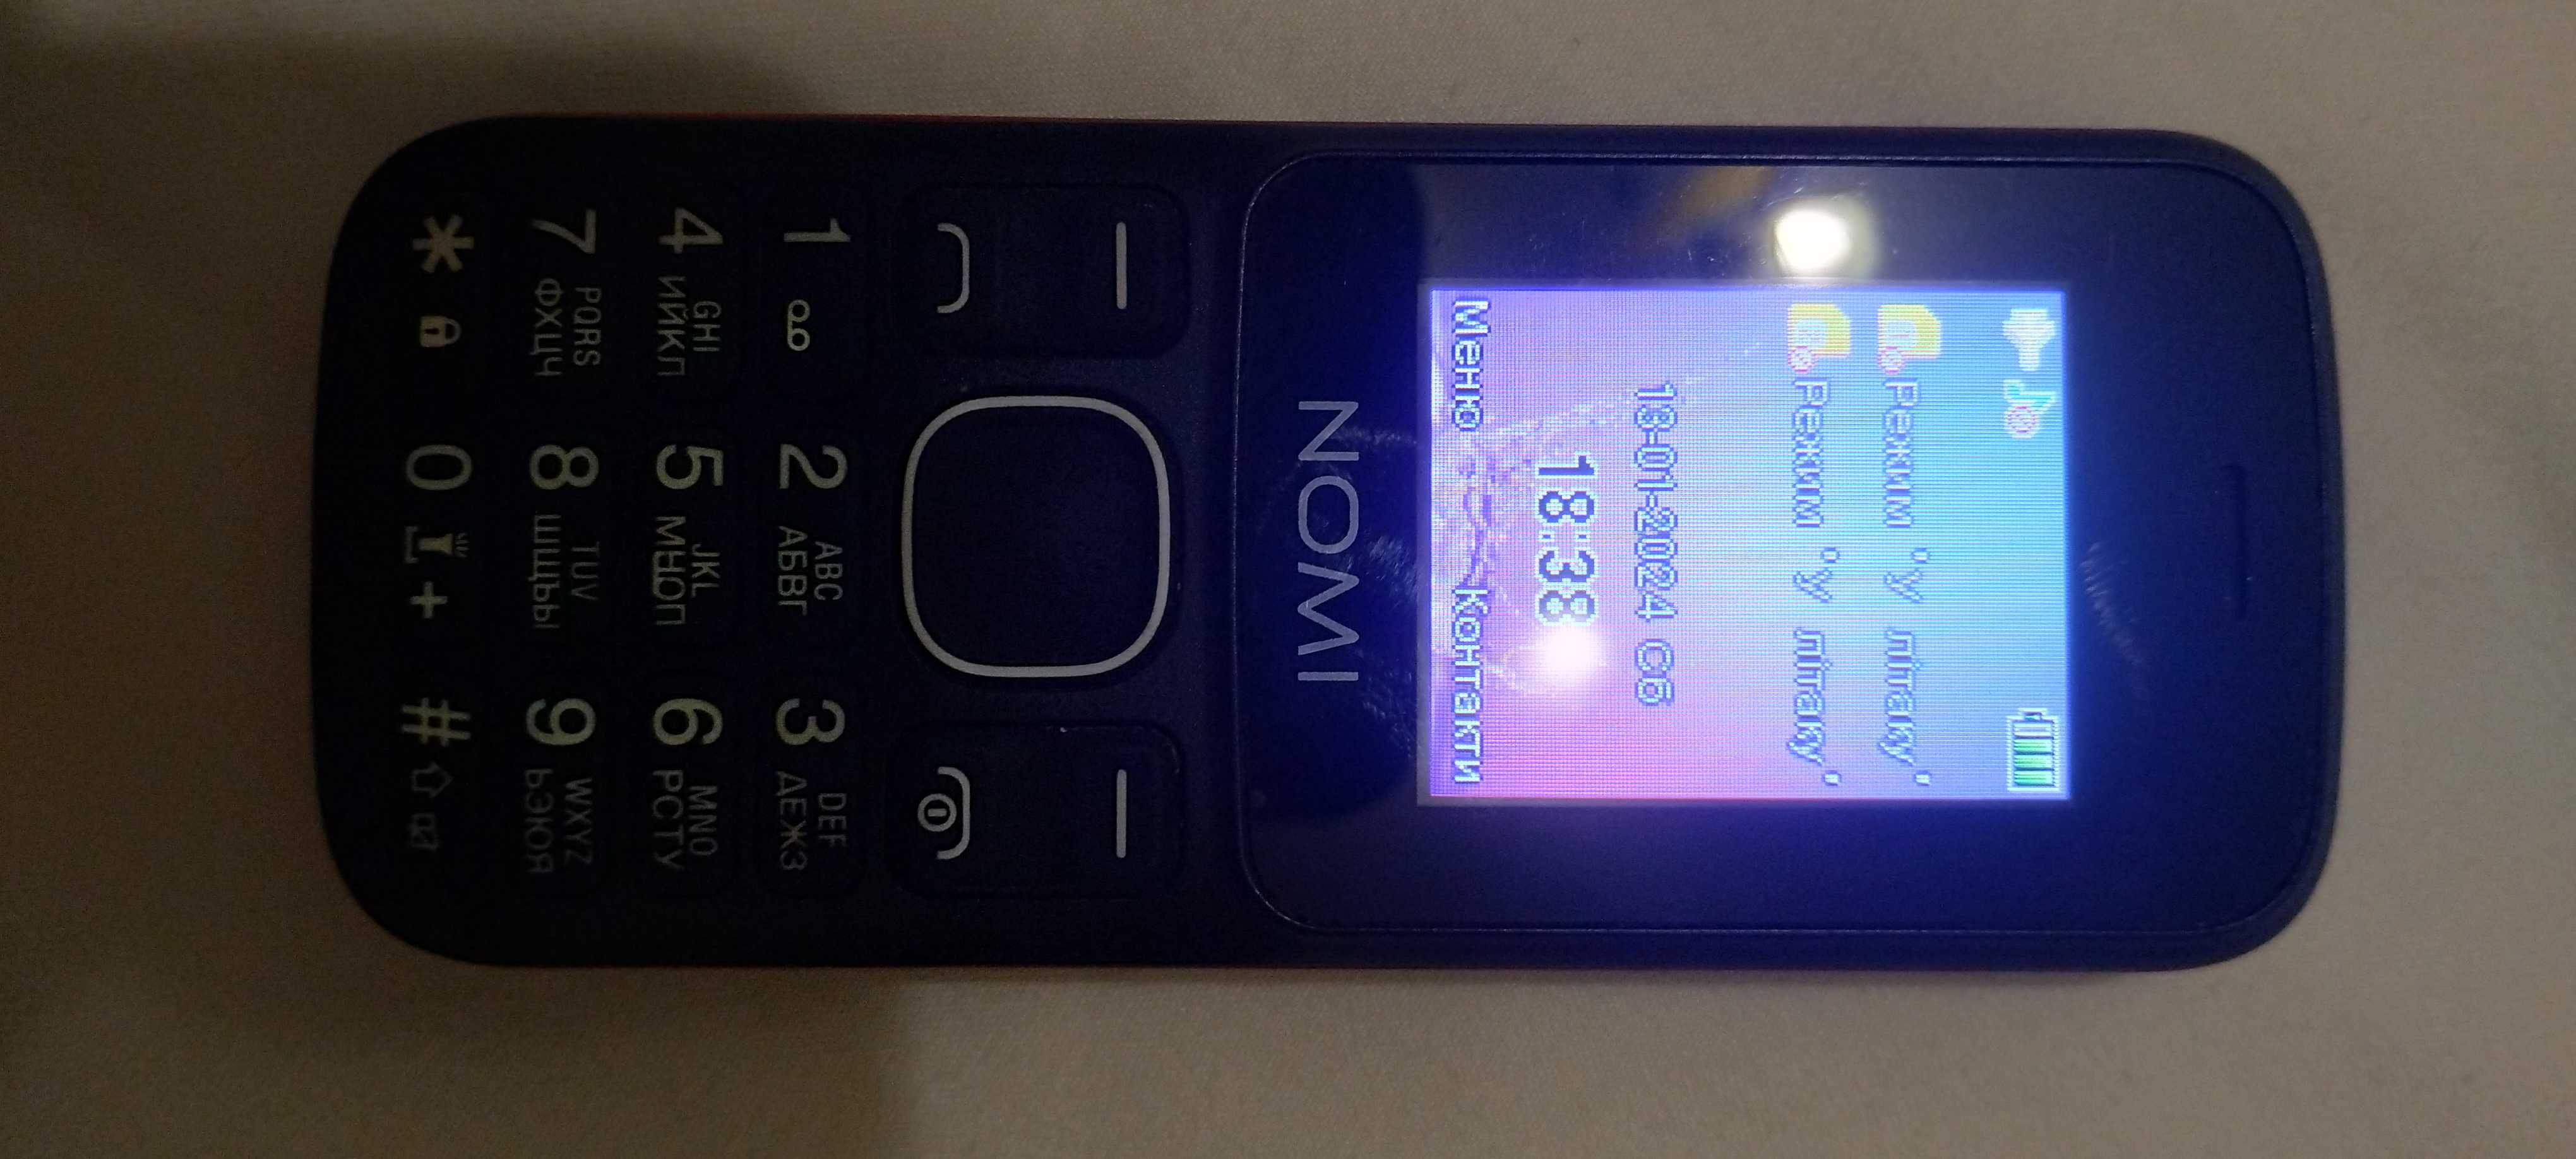 = Моб. телефон NOMI  +  Nokia + SIGMA =